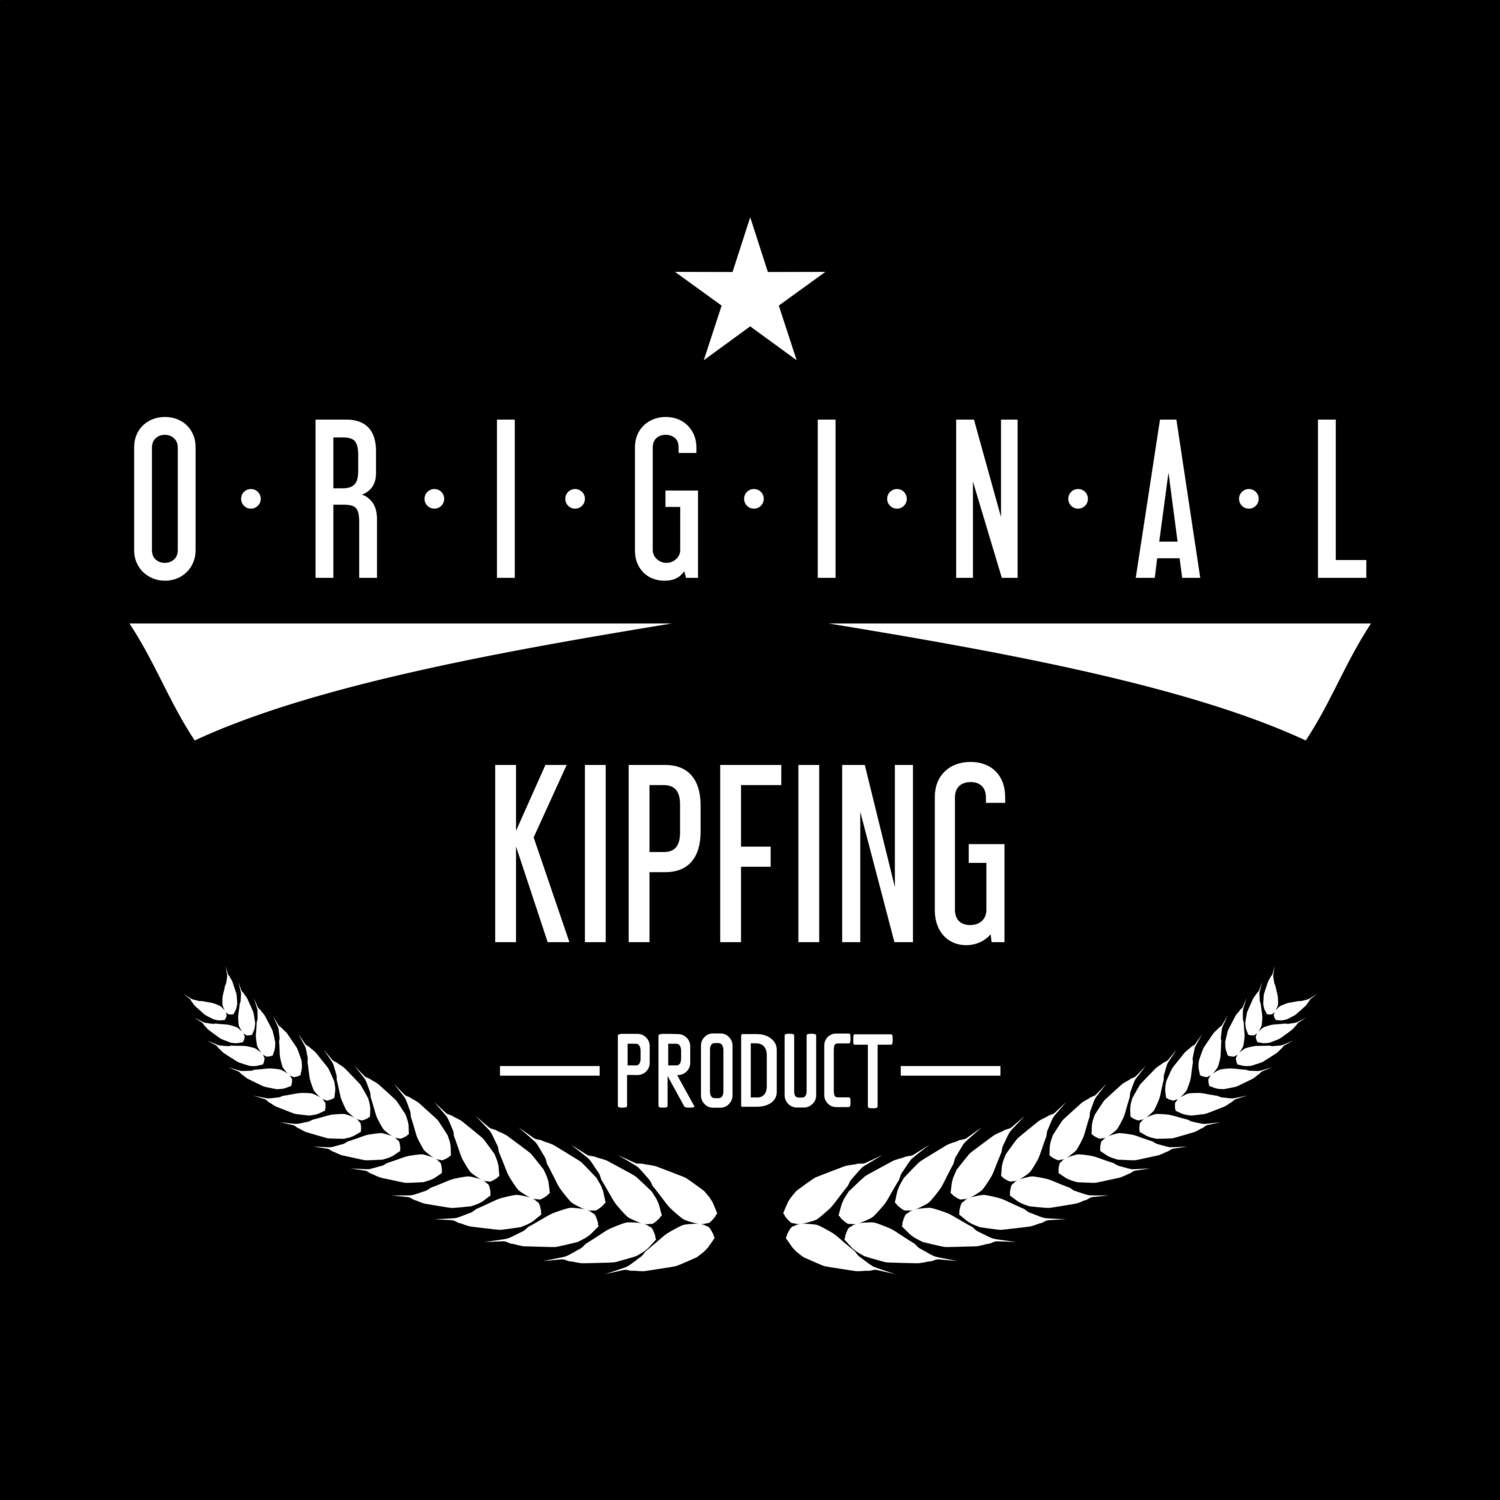 Kipfing T-Shirt »Original Product«